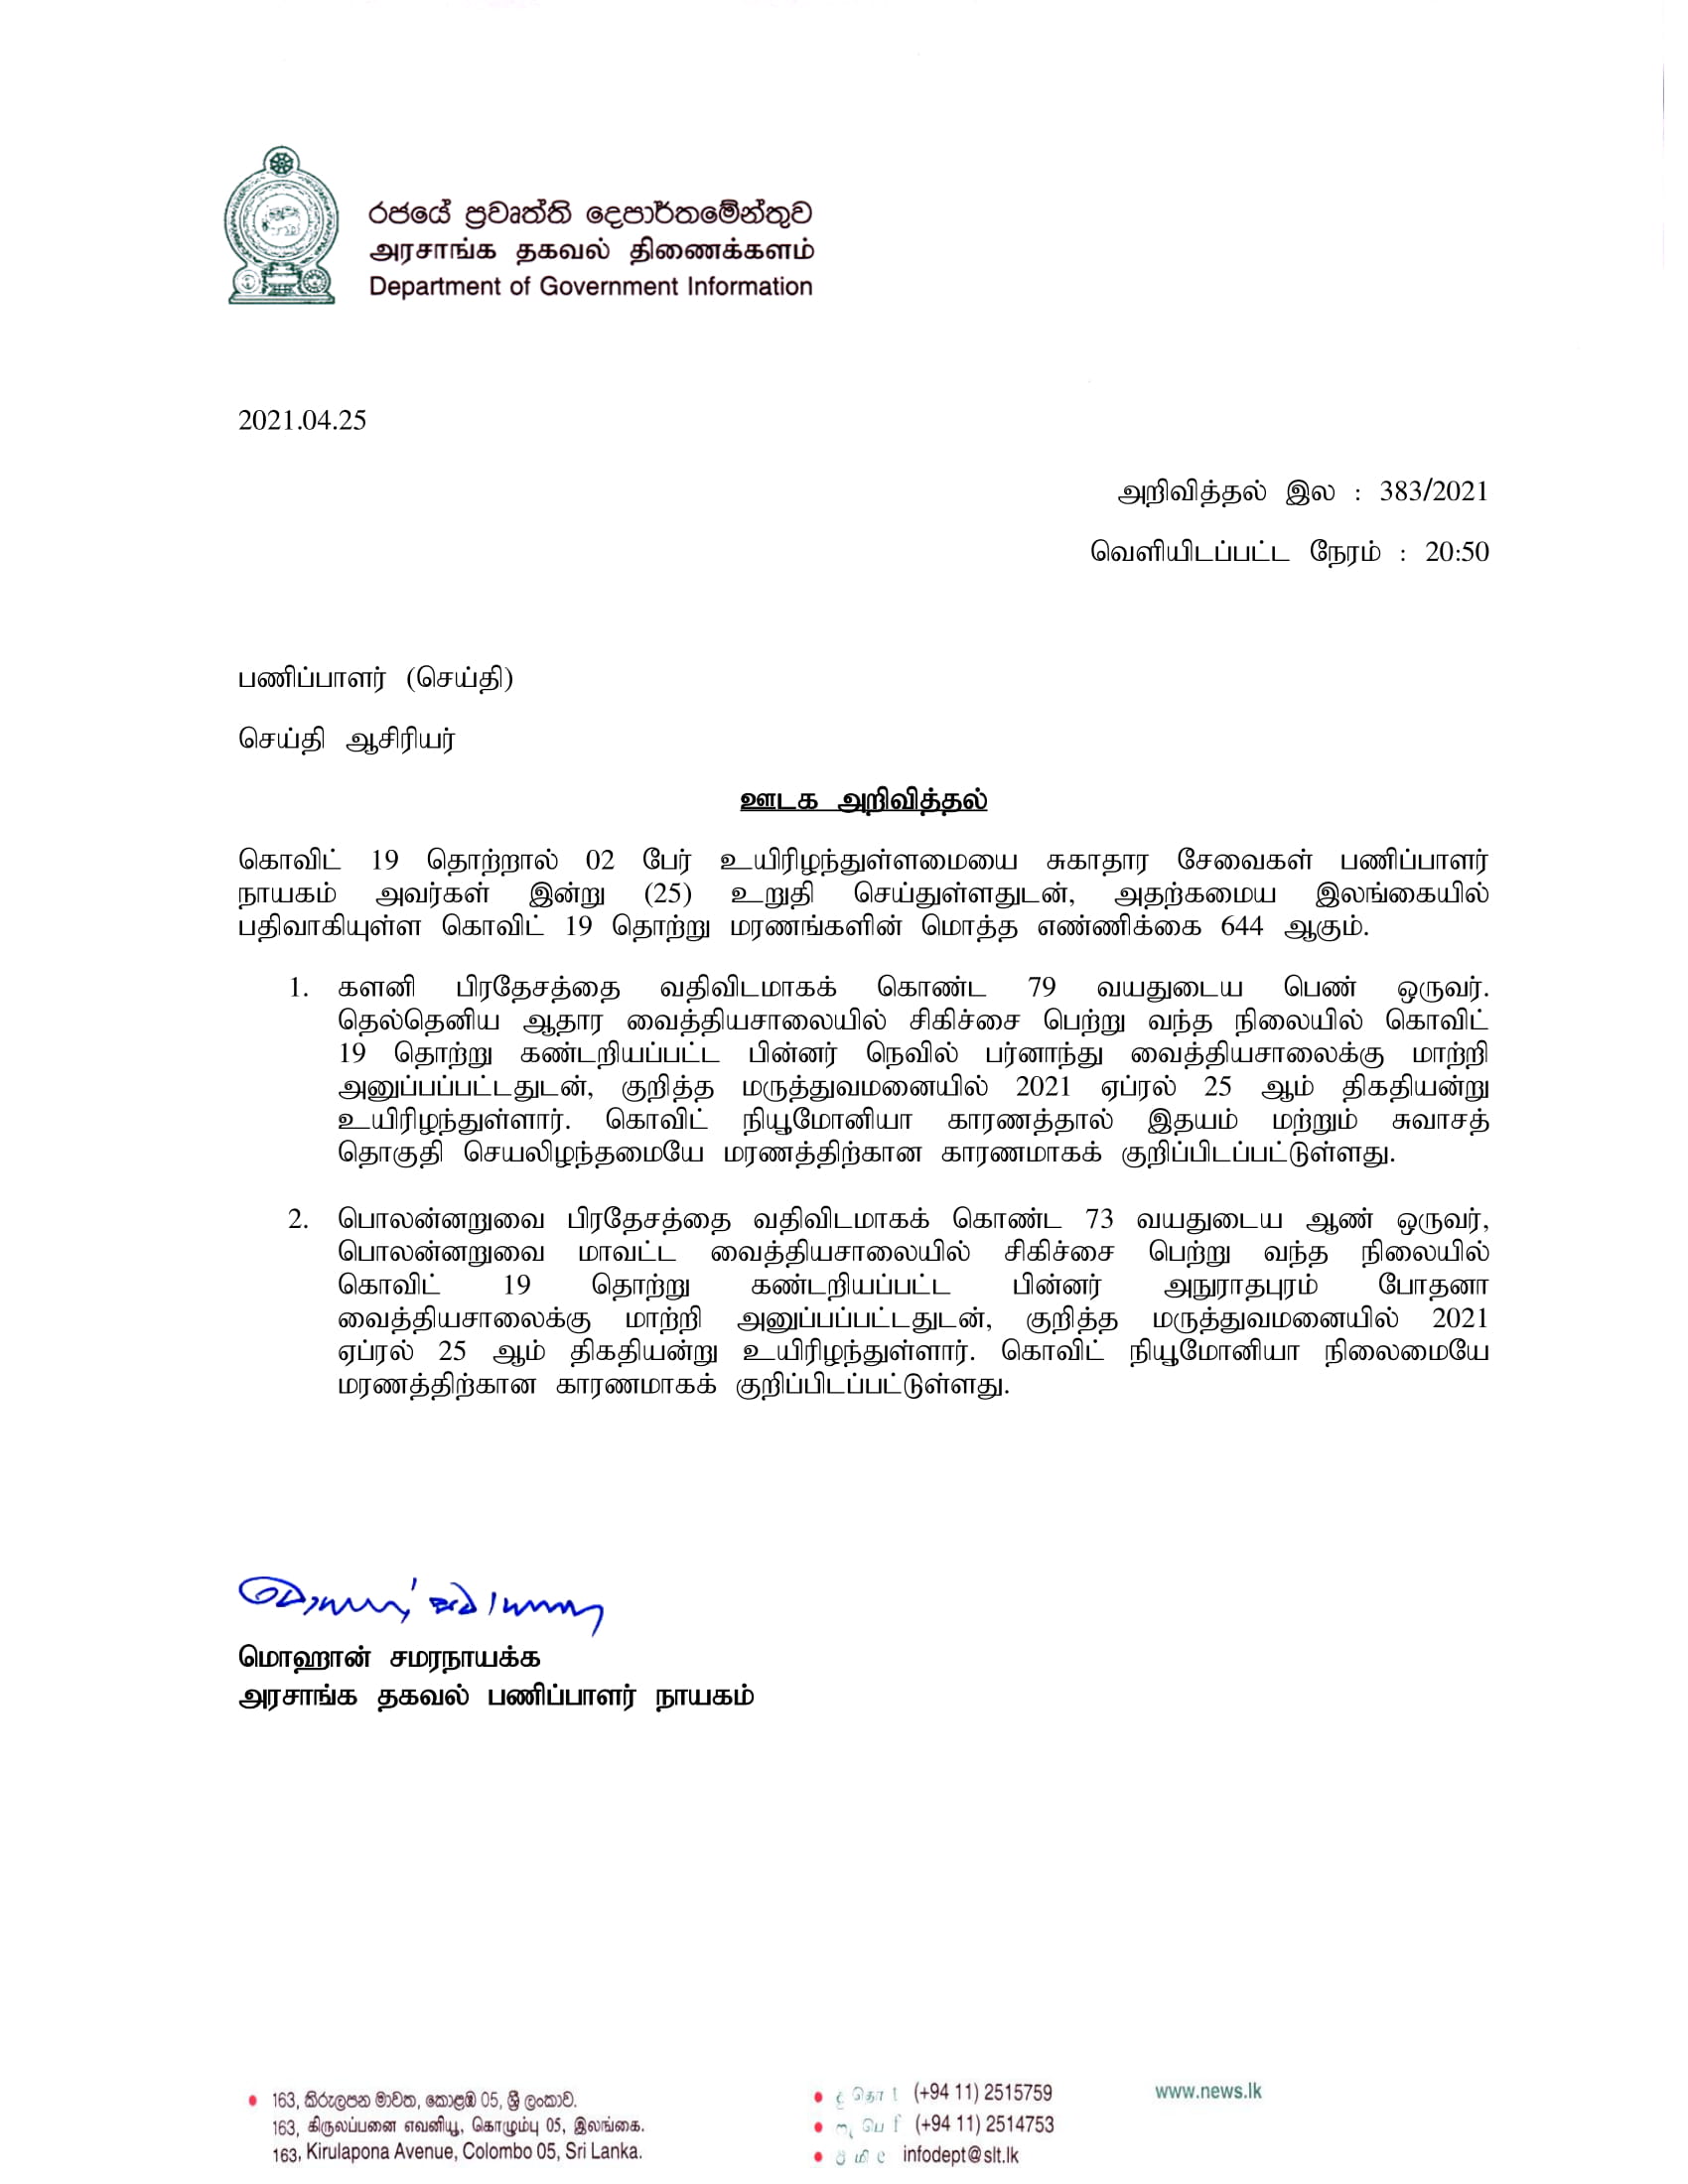 Press Release 383 Tamil 1